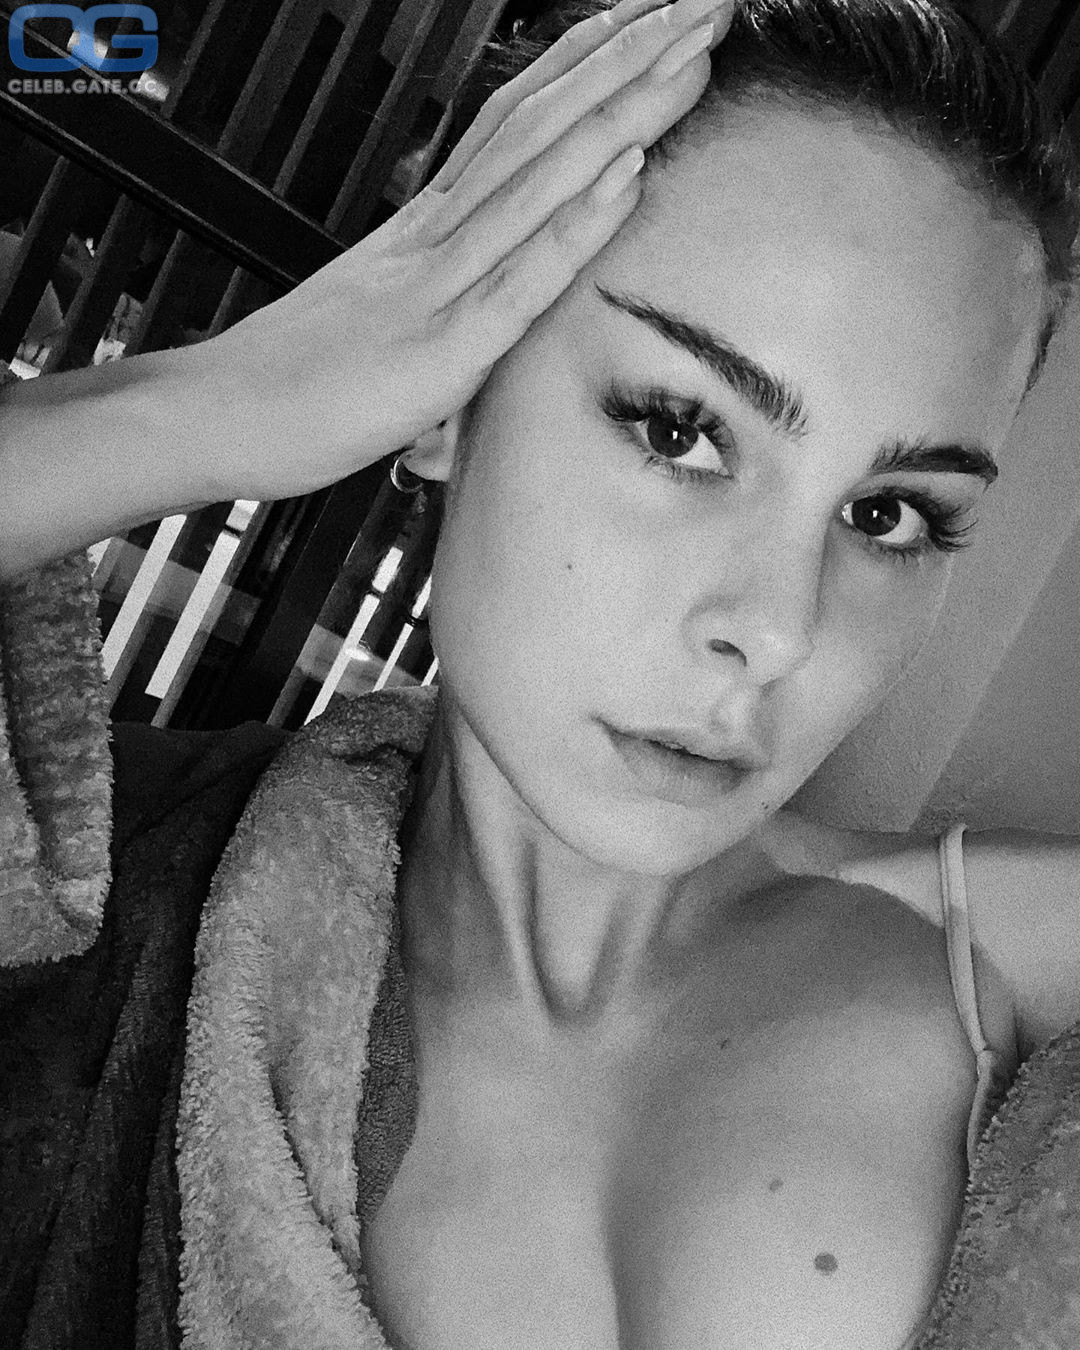 Lena meyer landrut nackt selfie